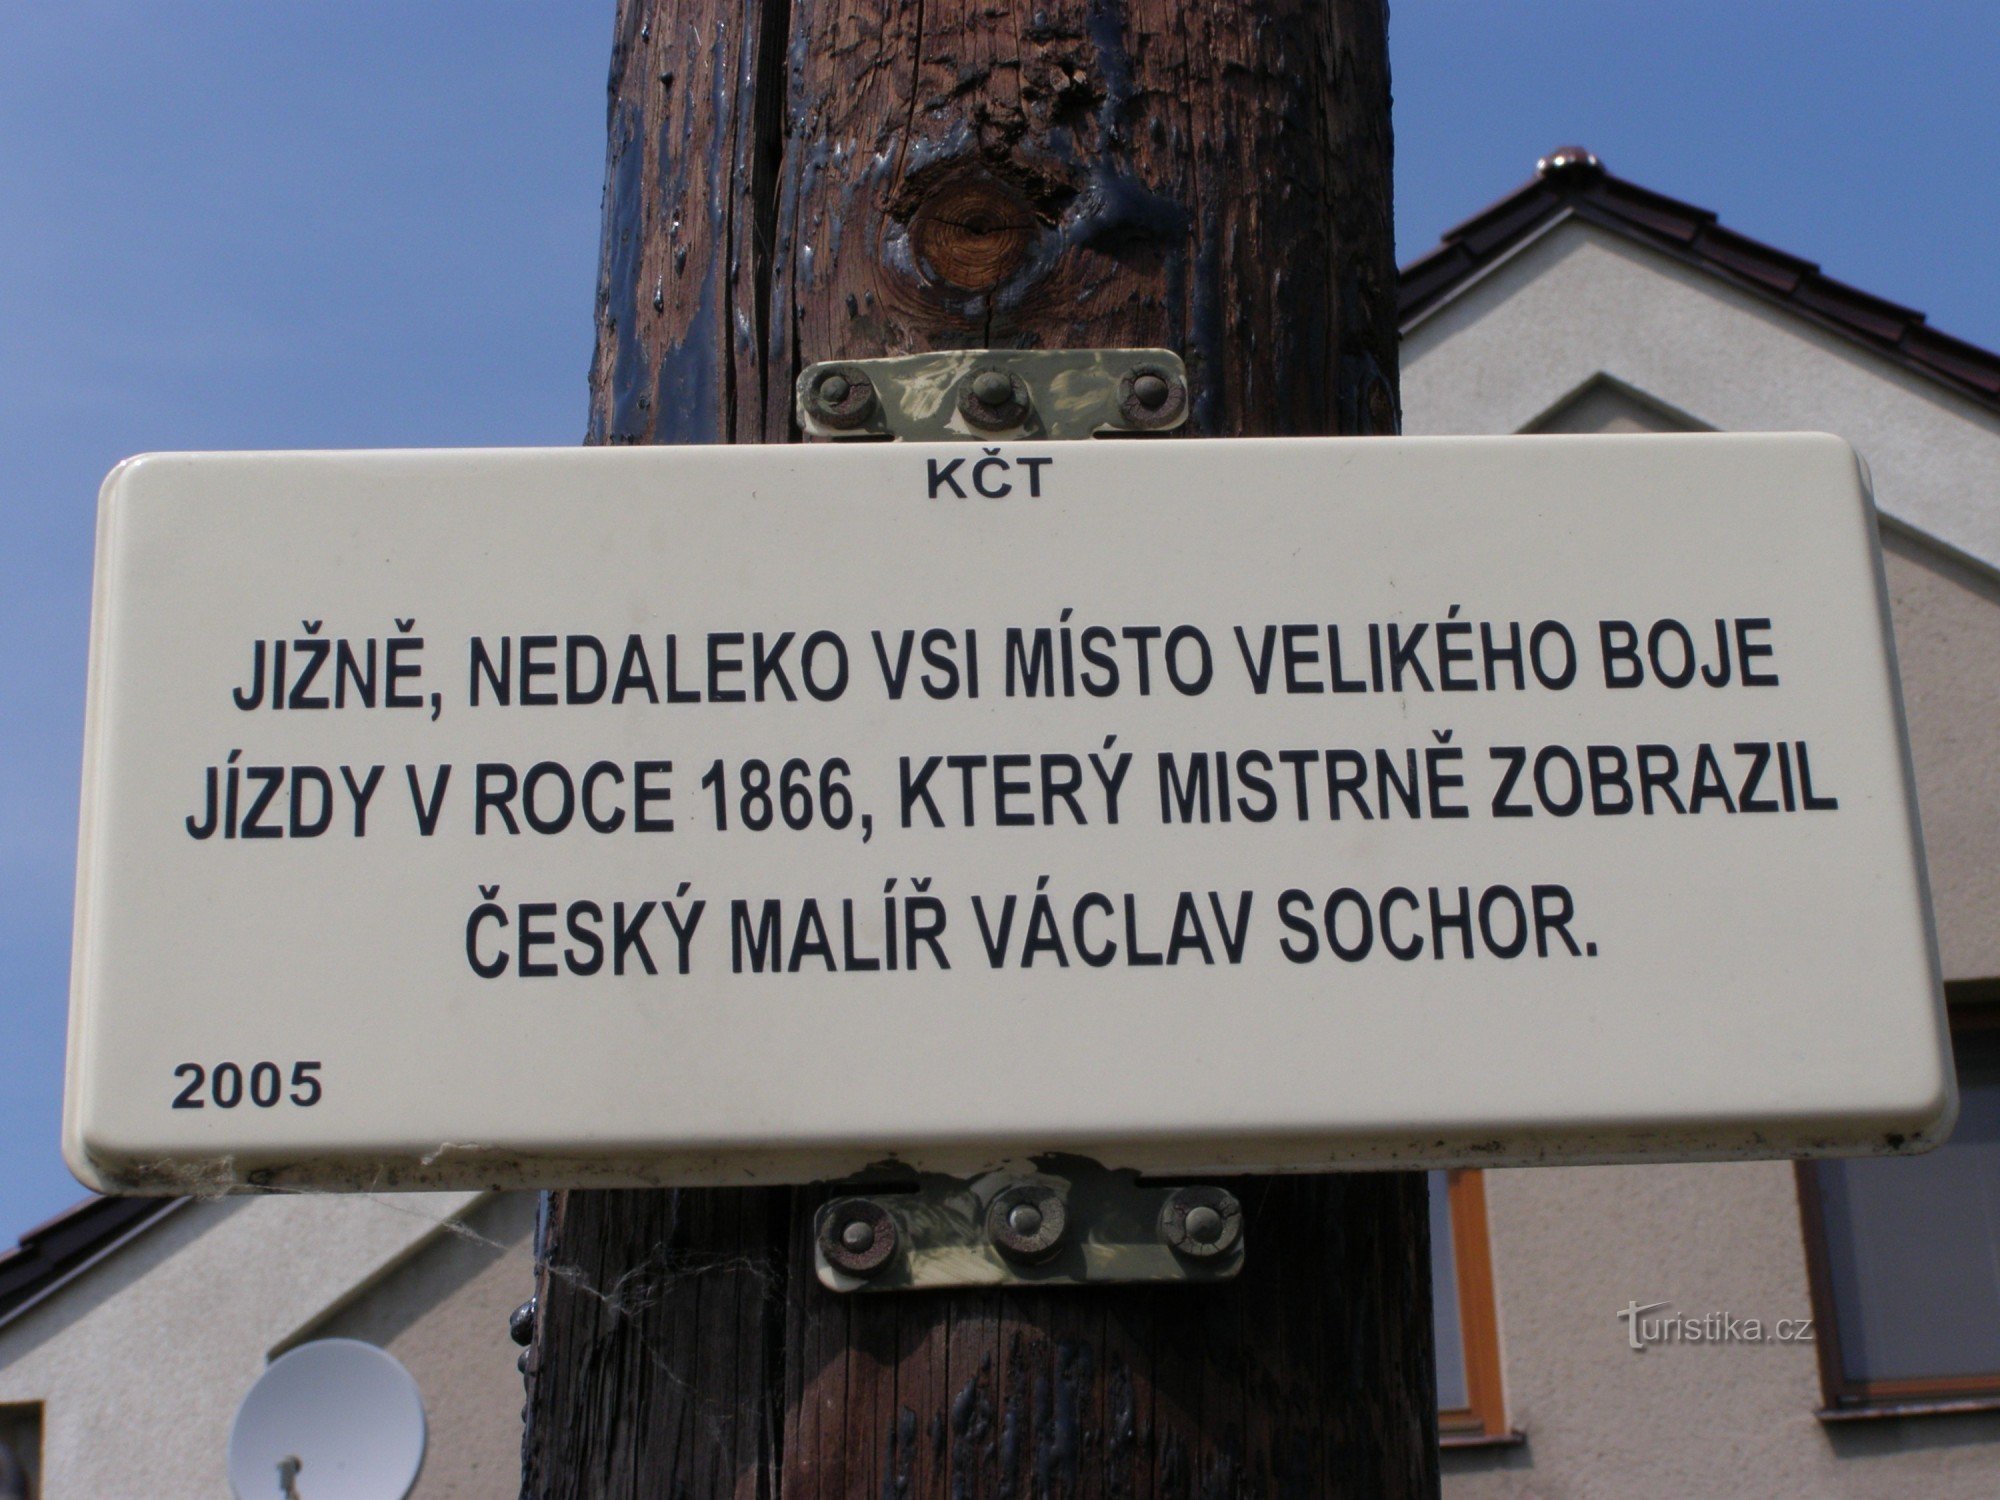 o cruzamento turístico de Strězetice